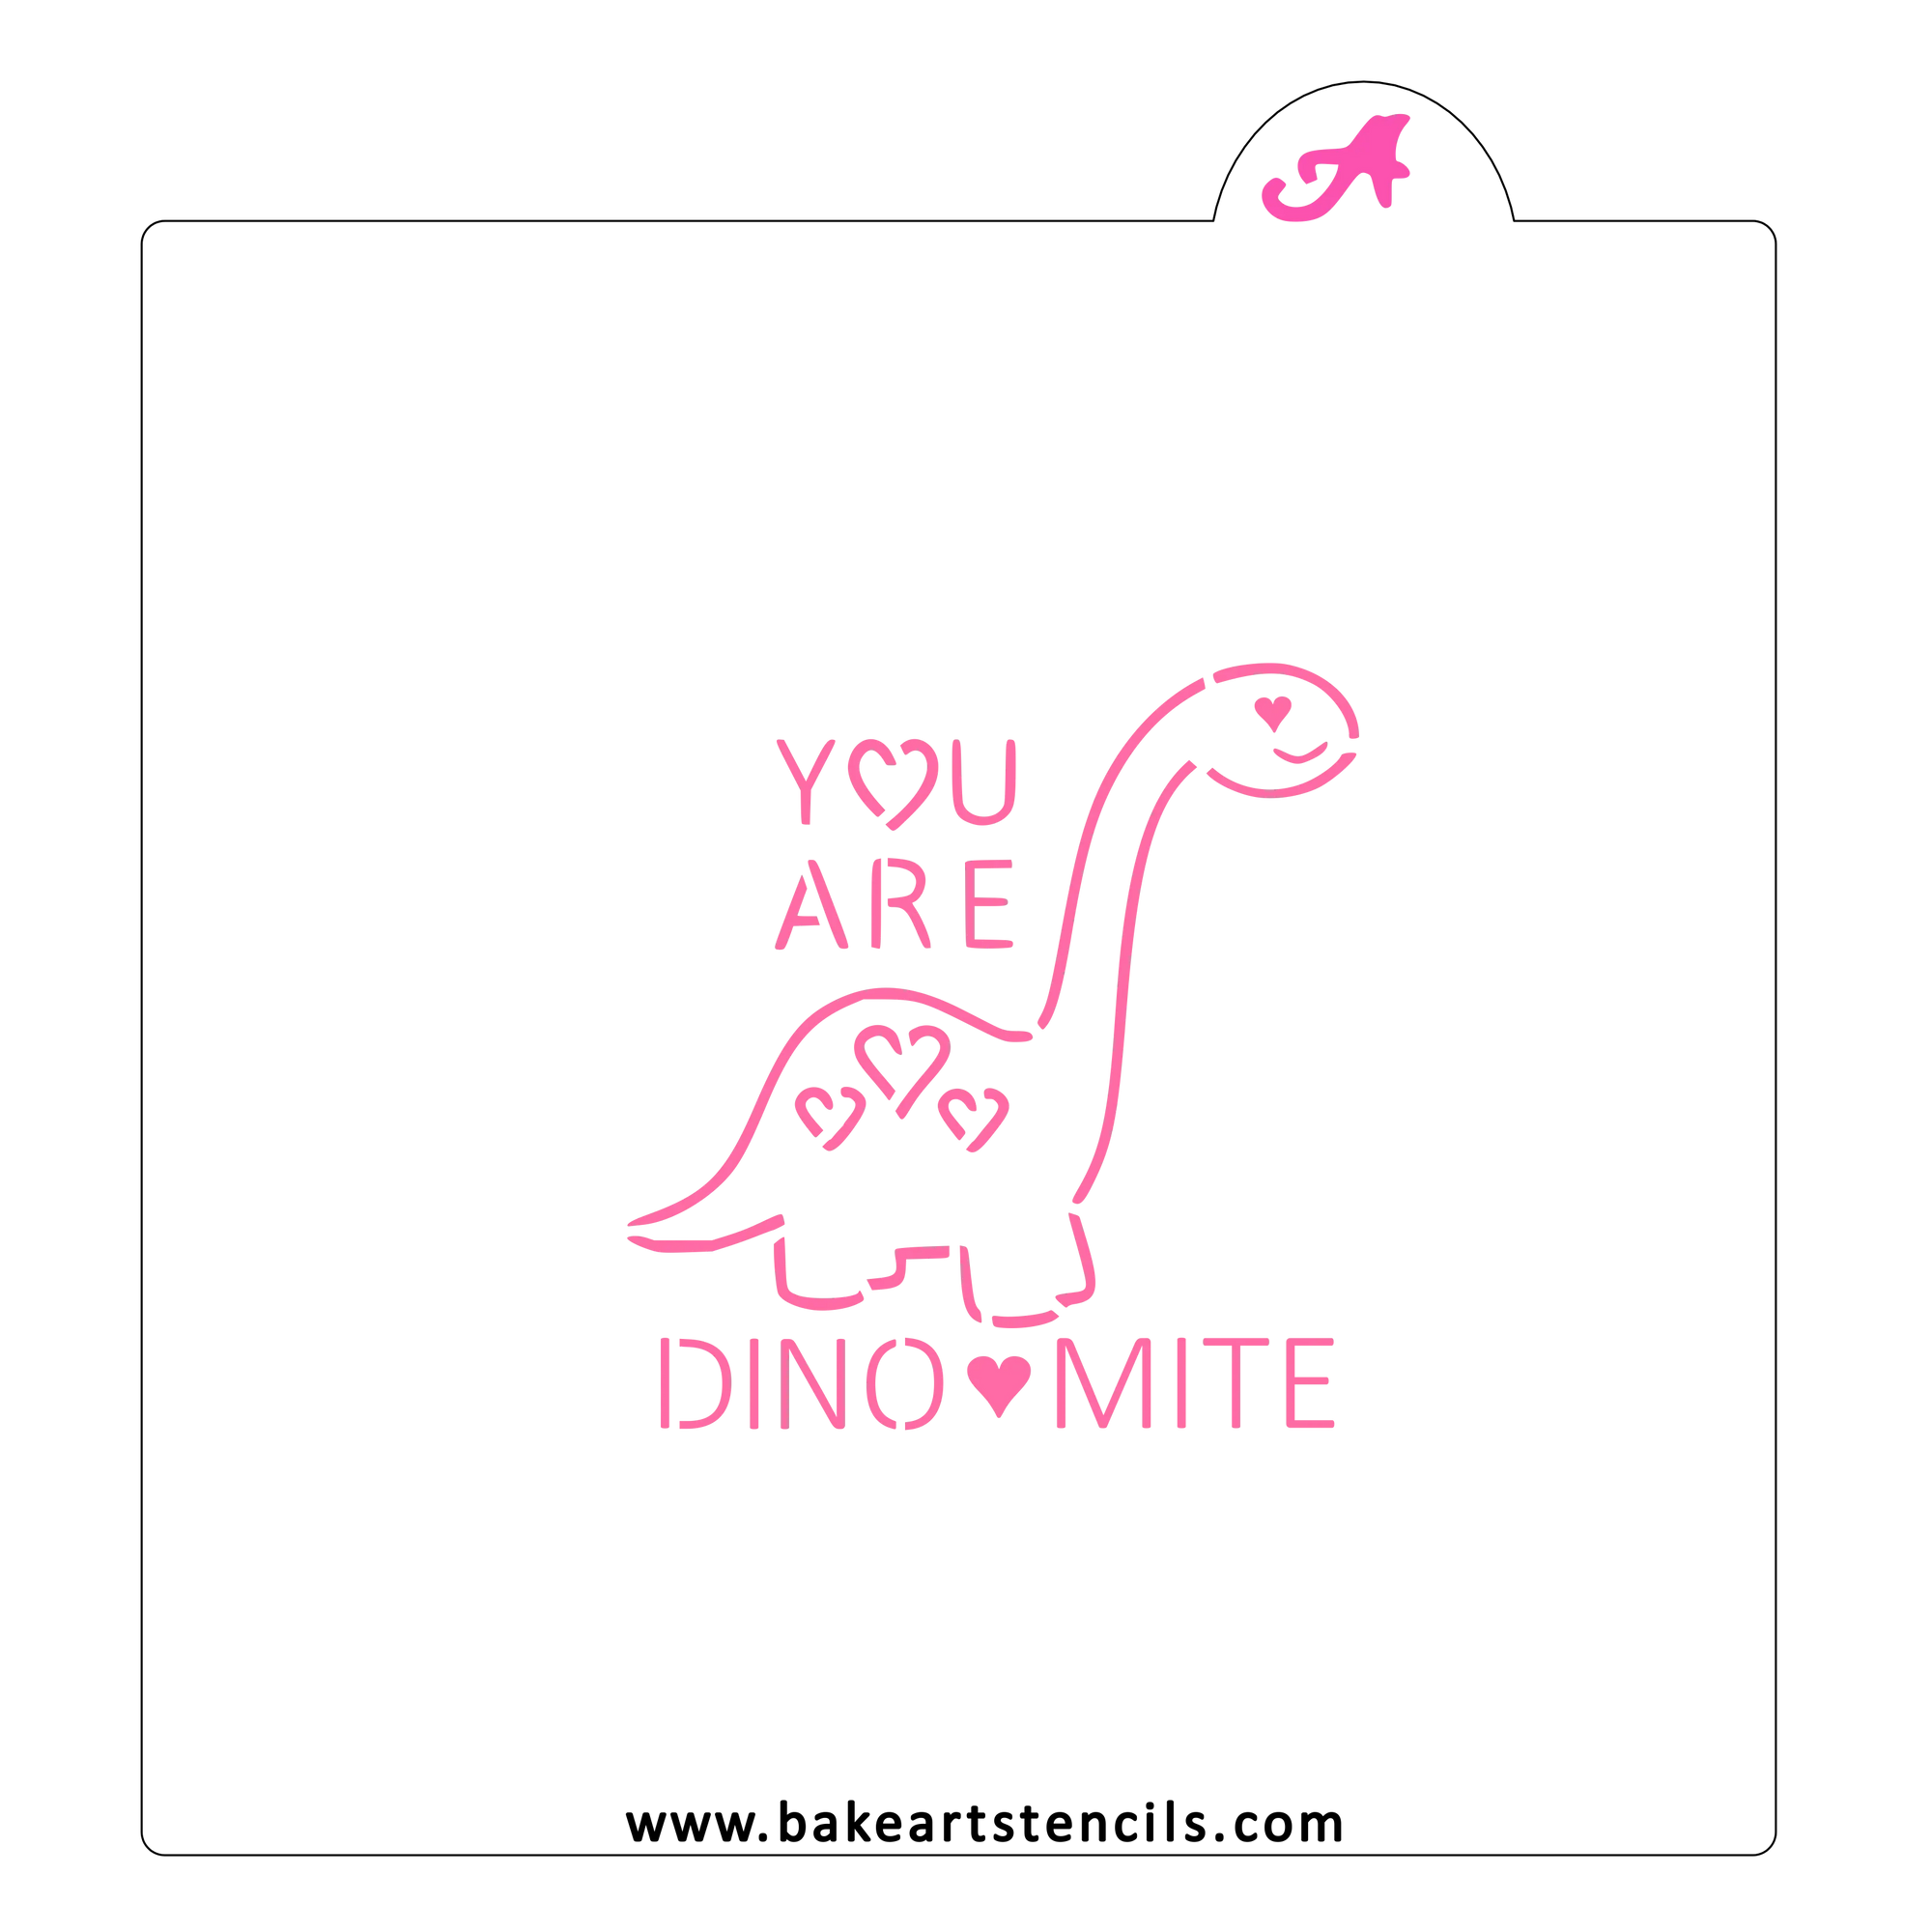 You Are Dino-Mite PYO Stencil bakeartstencil